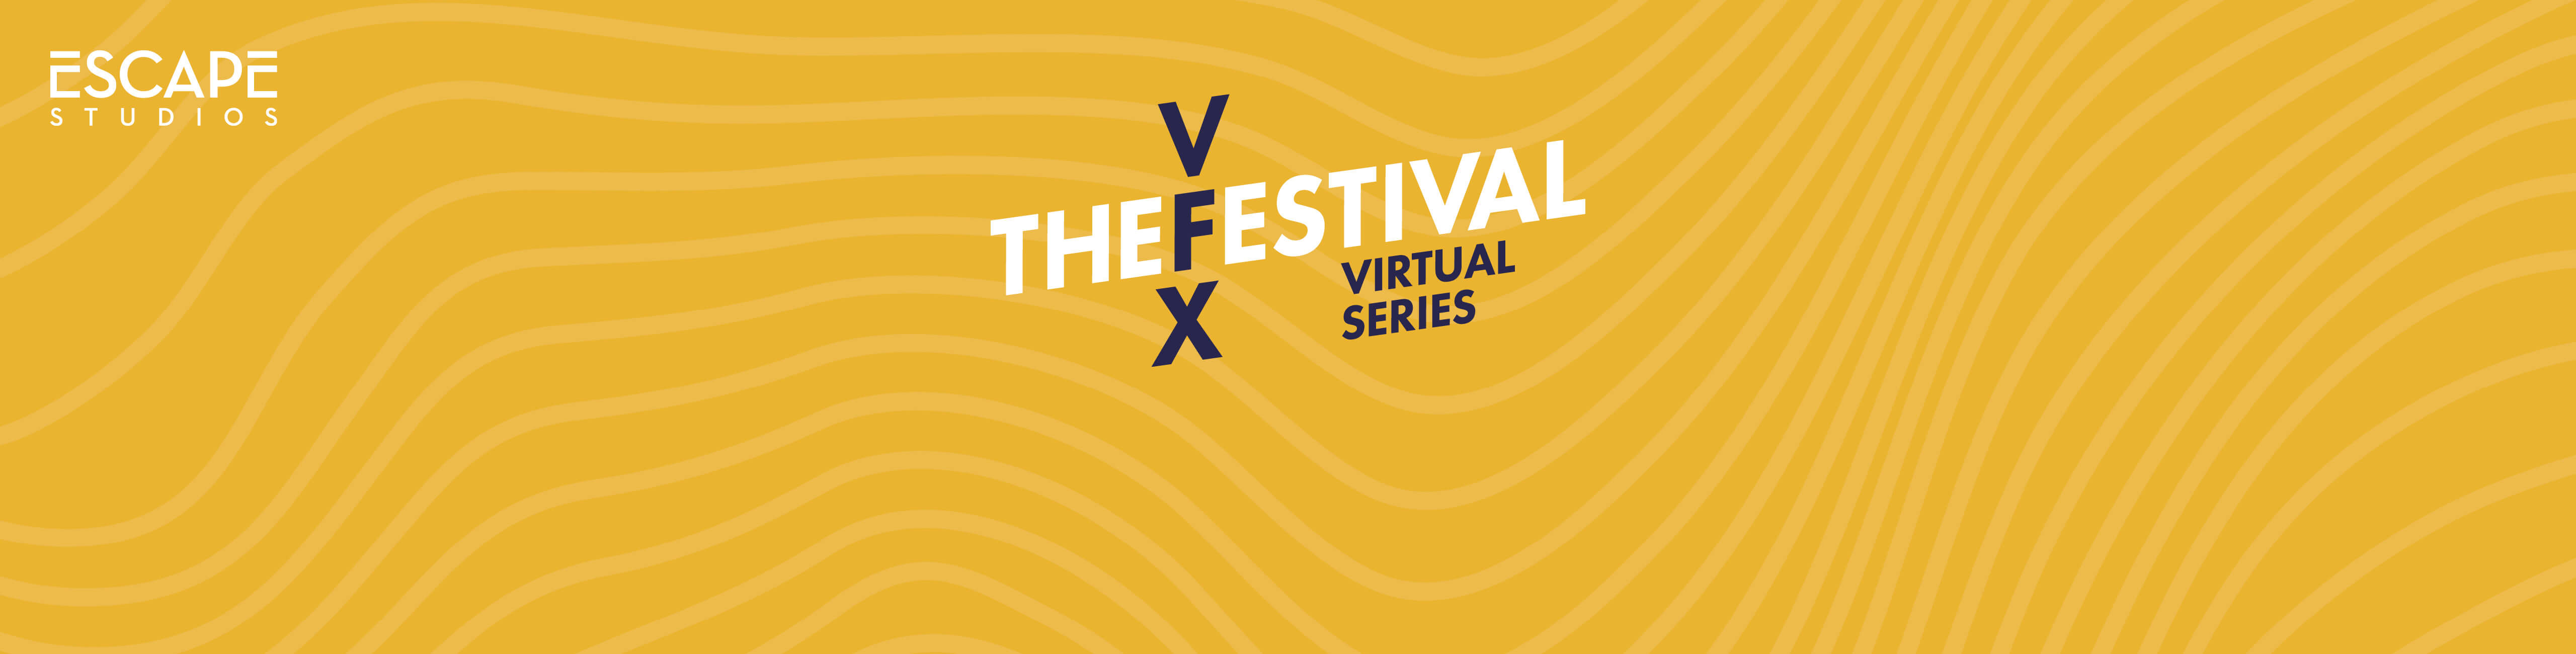 The VFX virtual series